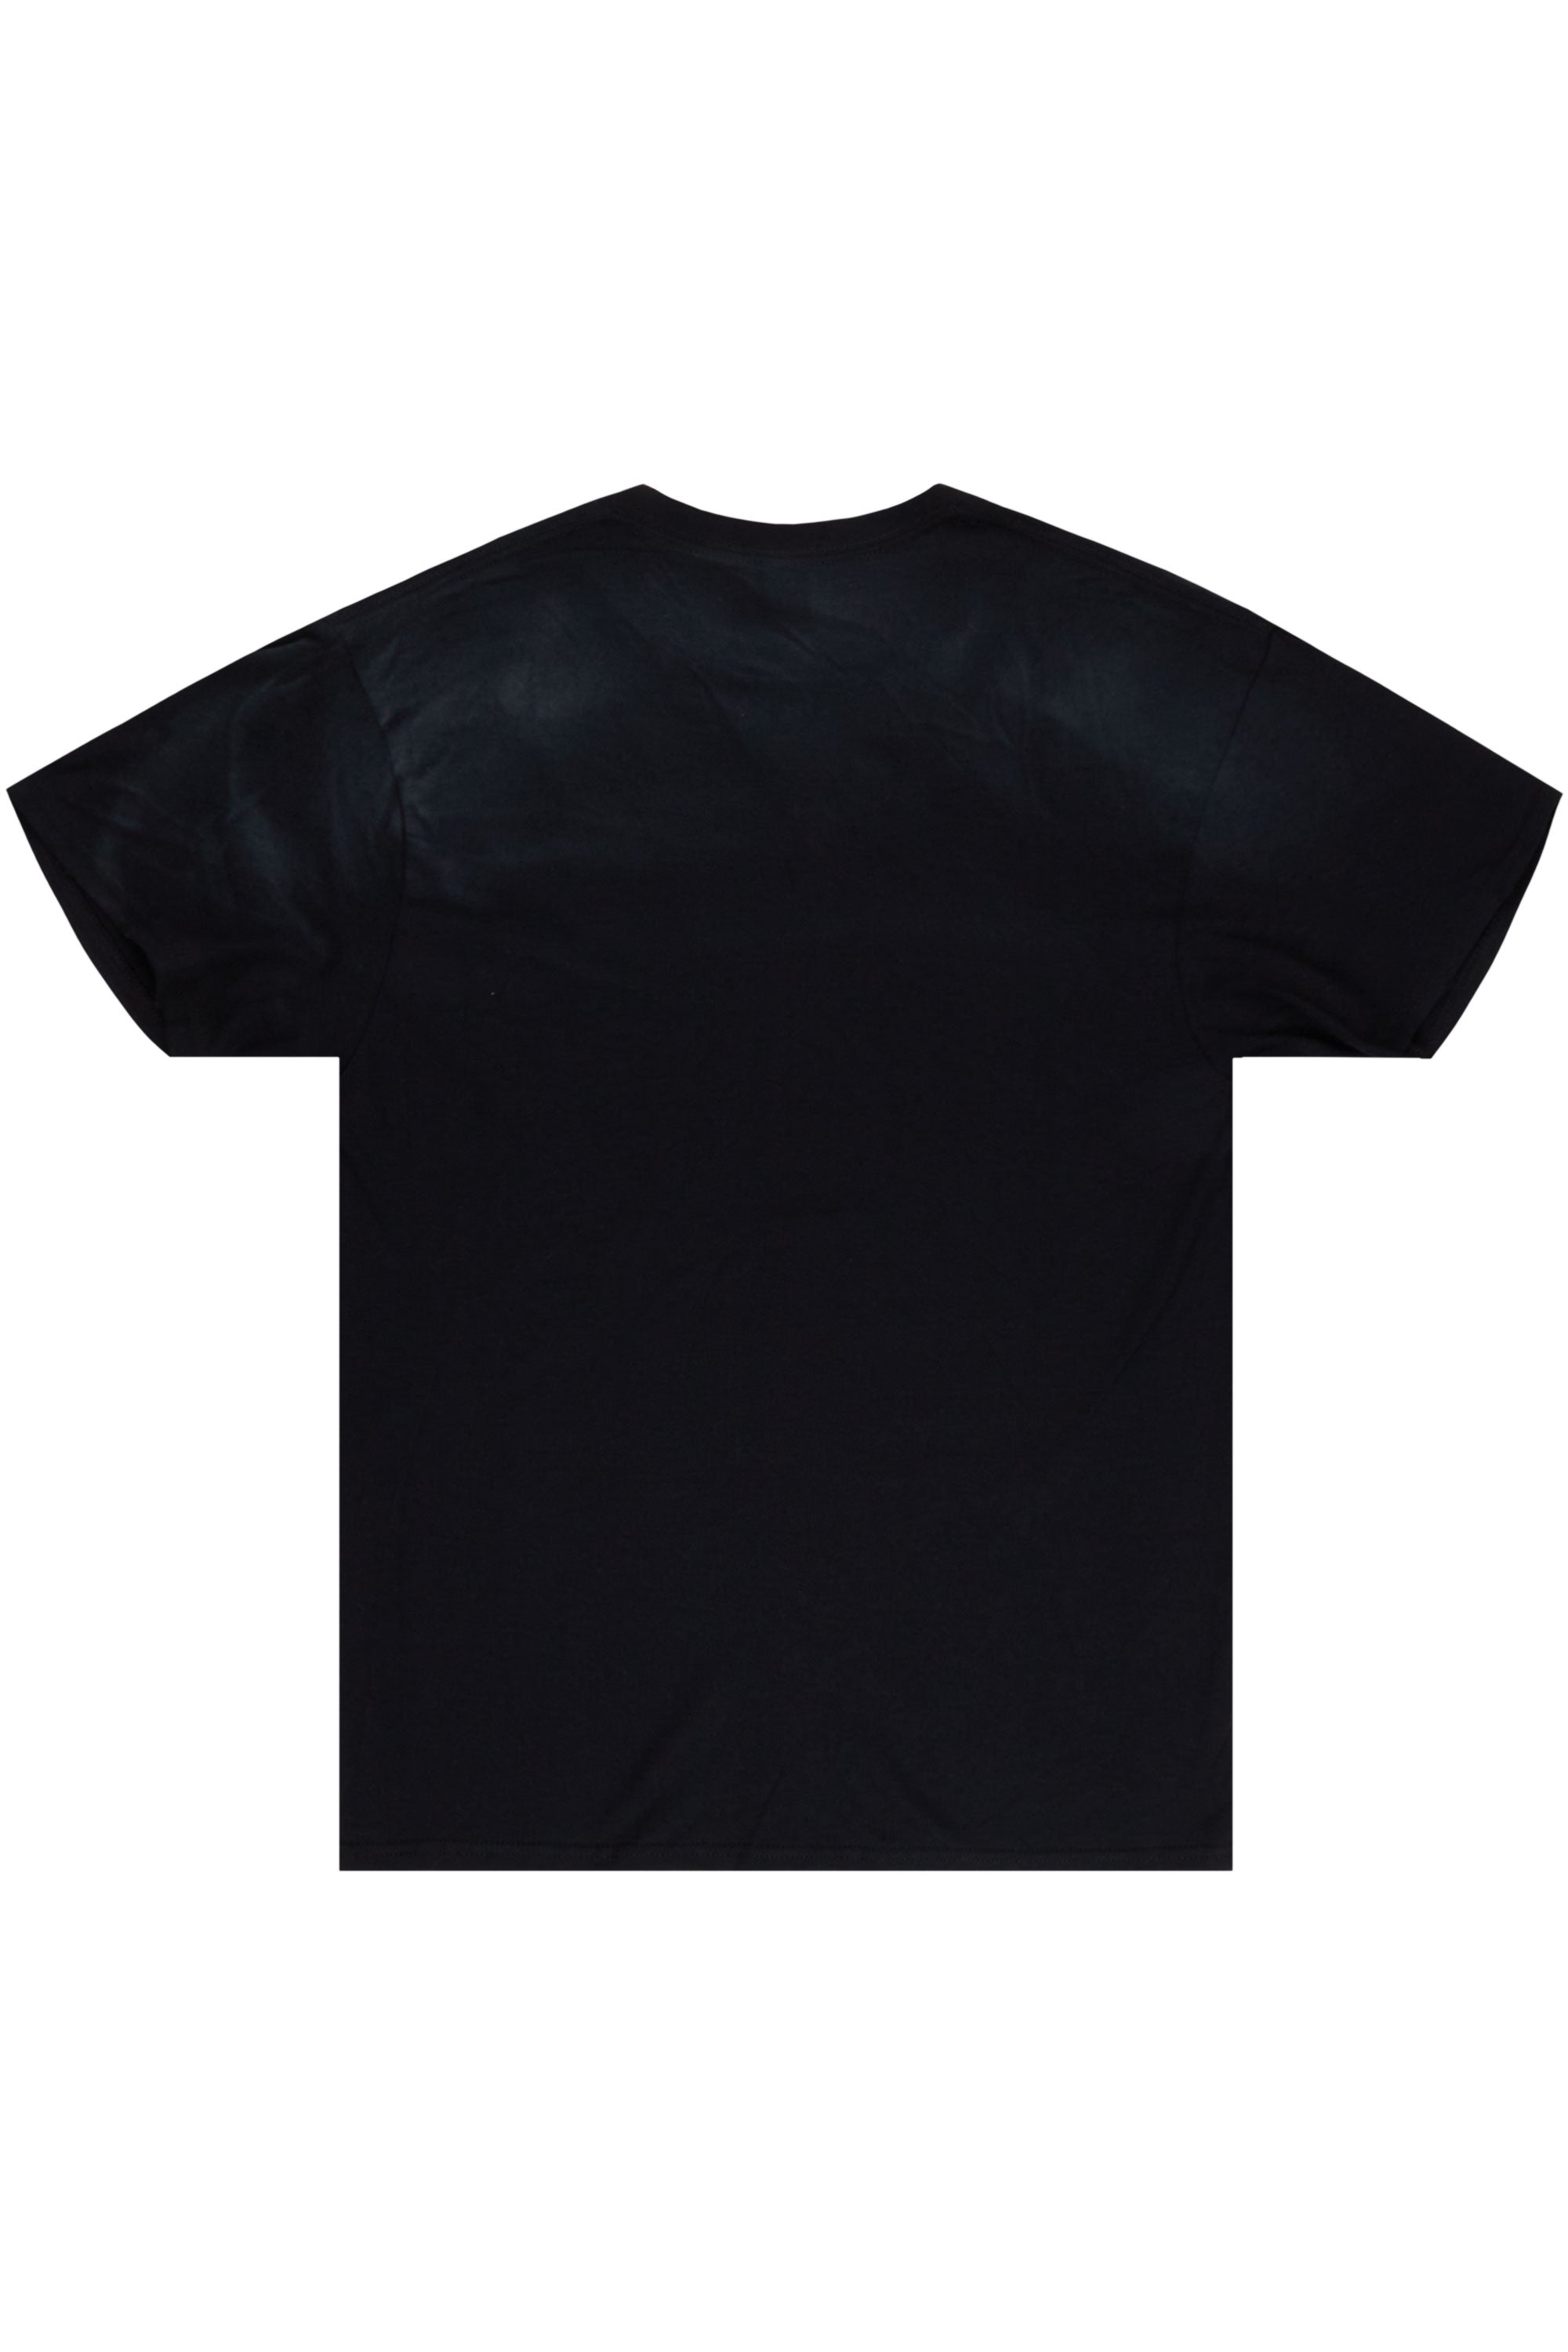 Phulbas Black Graphic T-Shirt